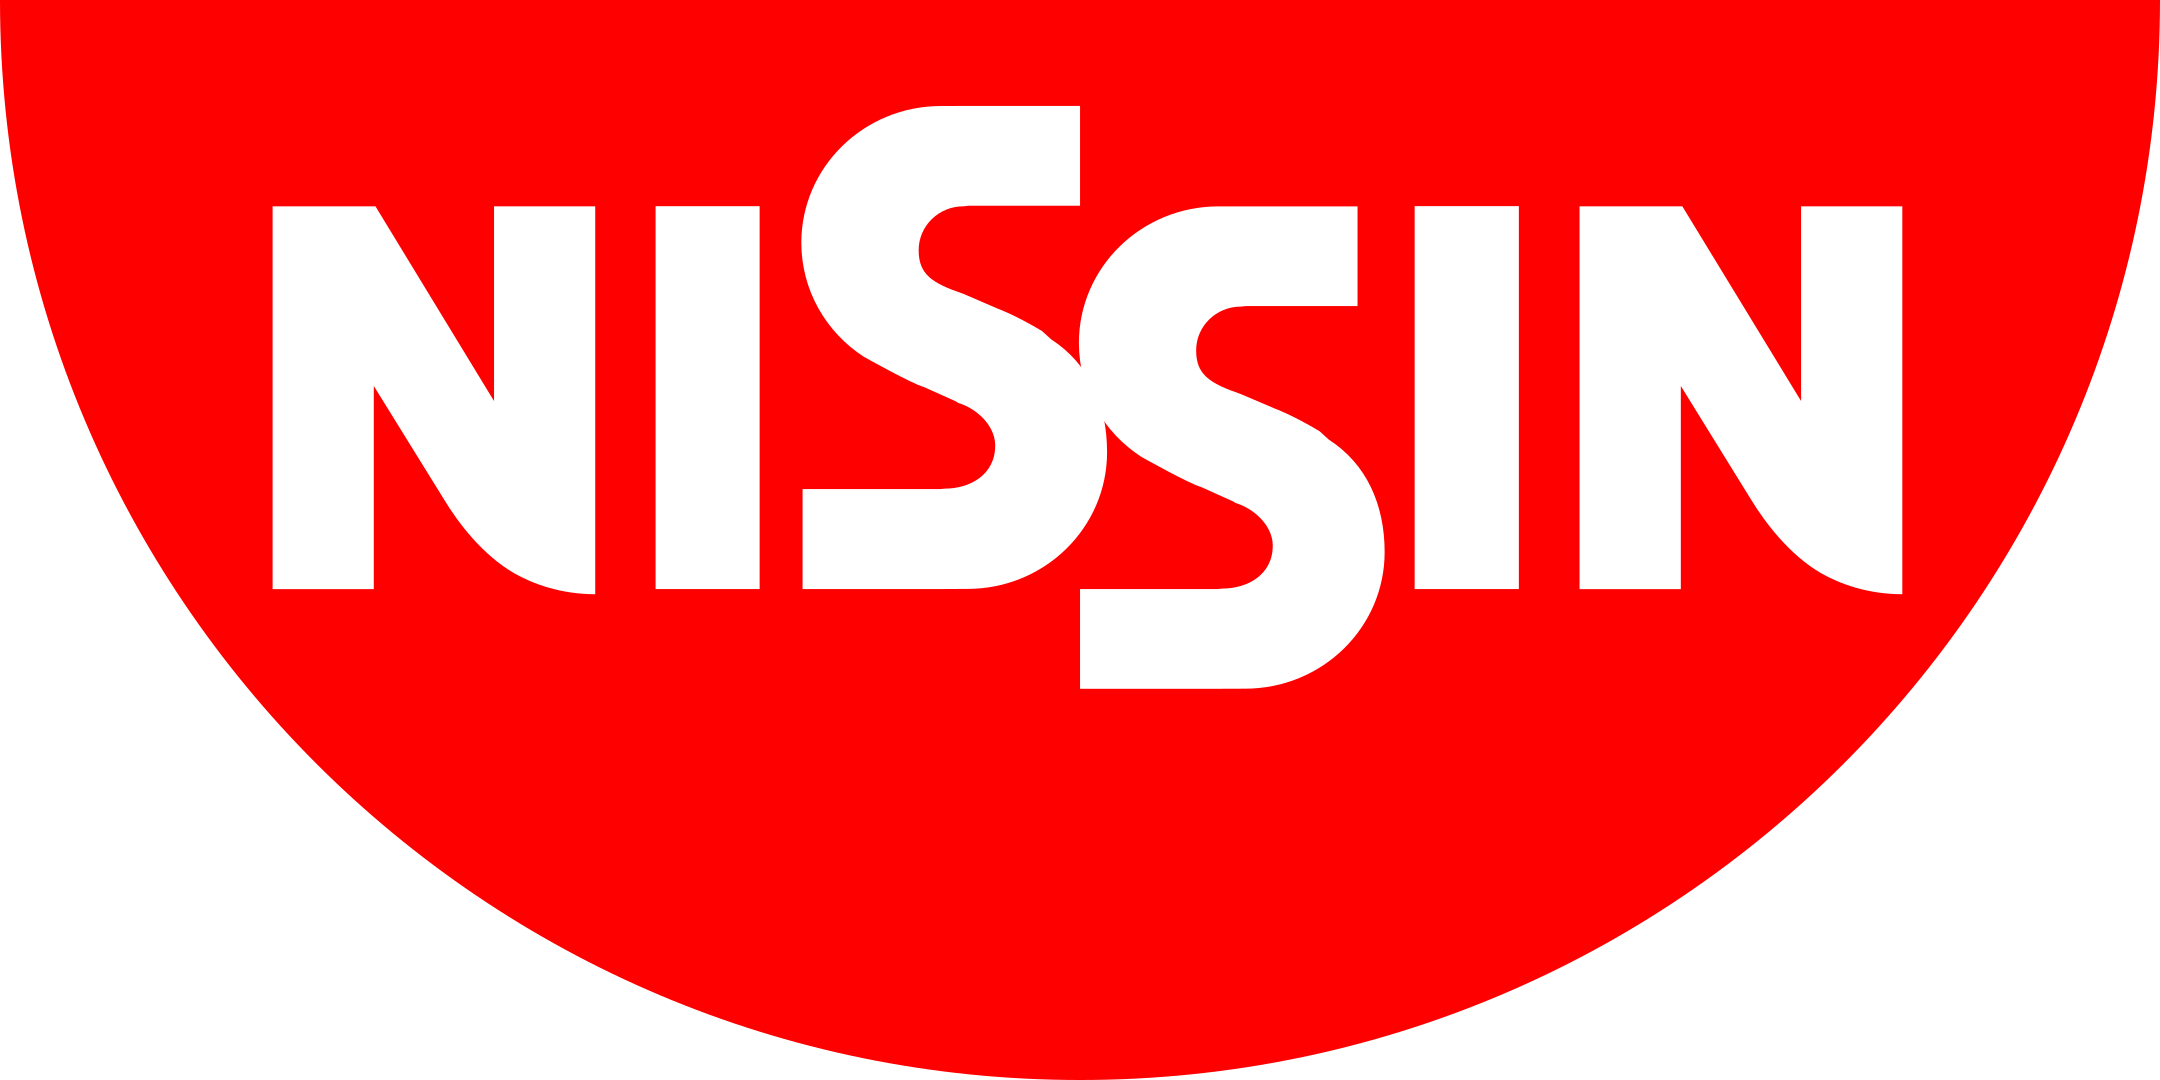 nissin logo 1 1 - Nissin Logo